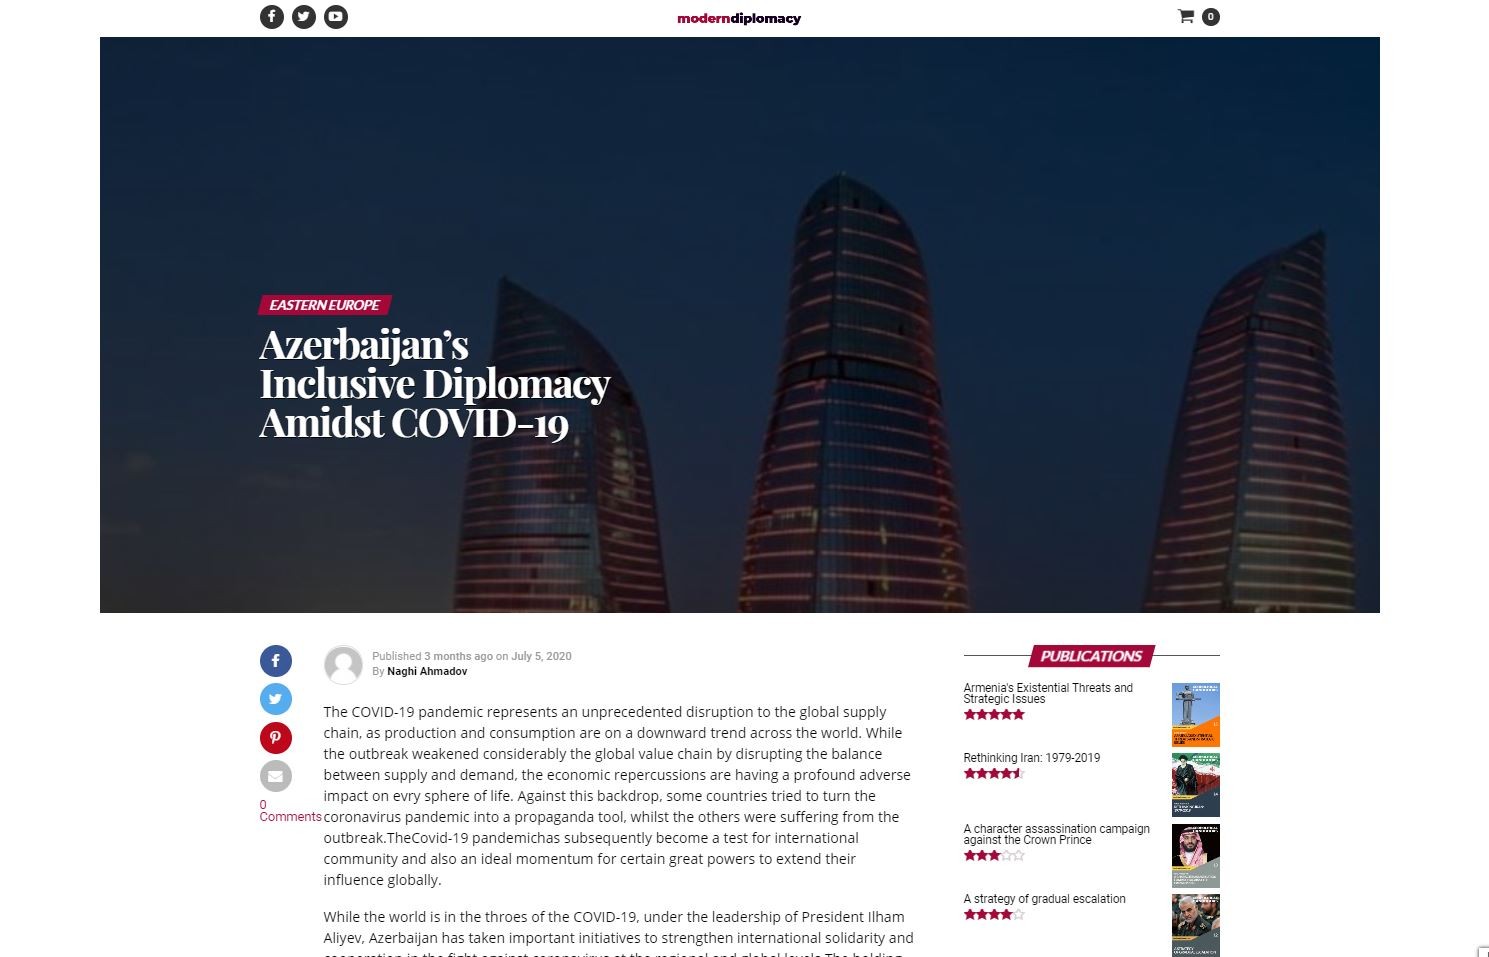 Azerbaijan’s Inclusive Diplomacy Amidst COVID-19